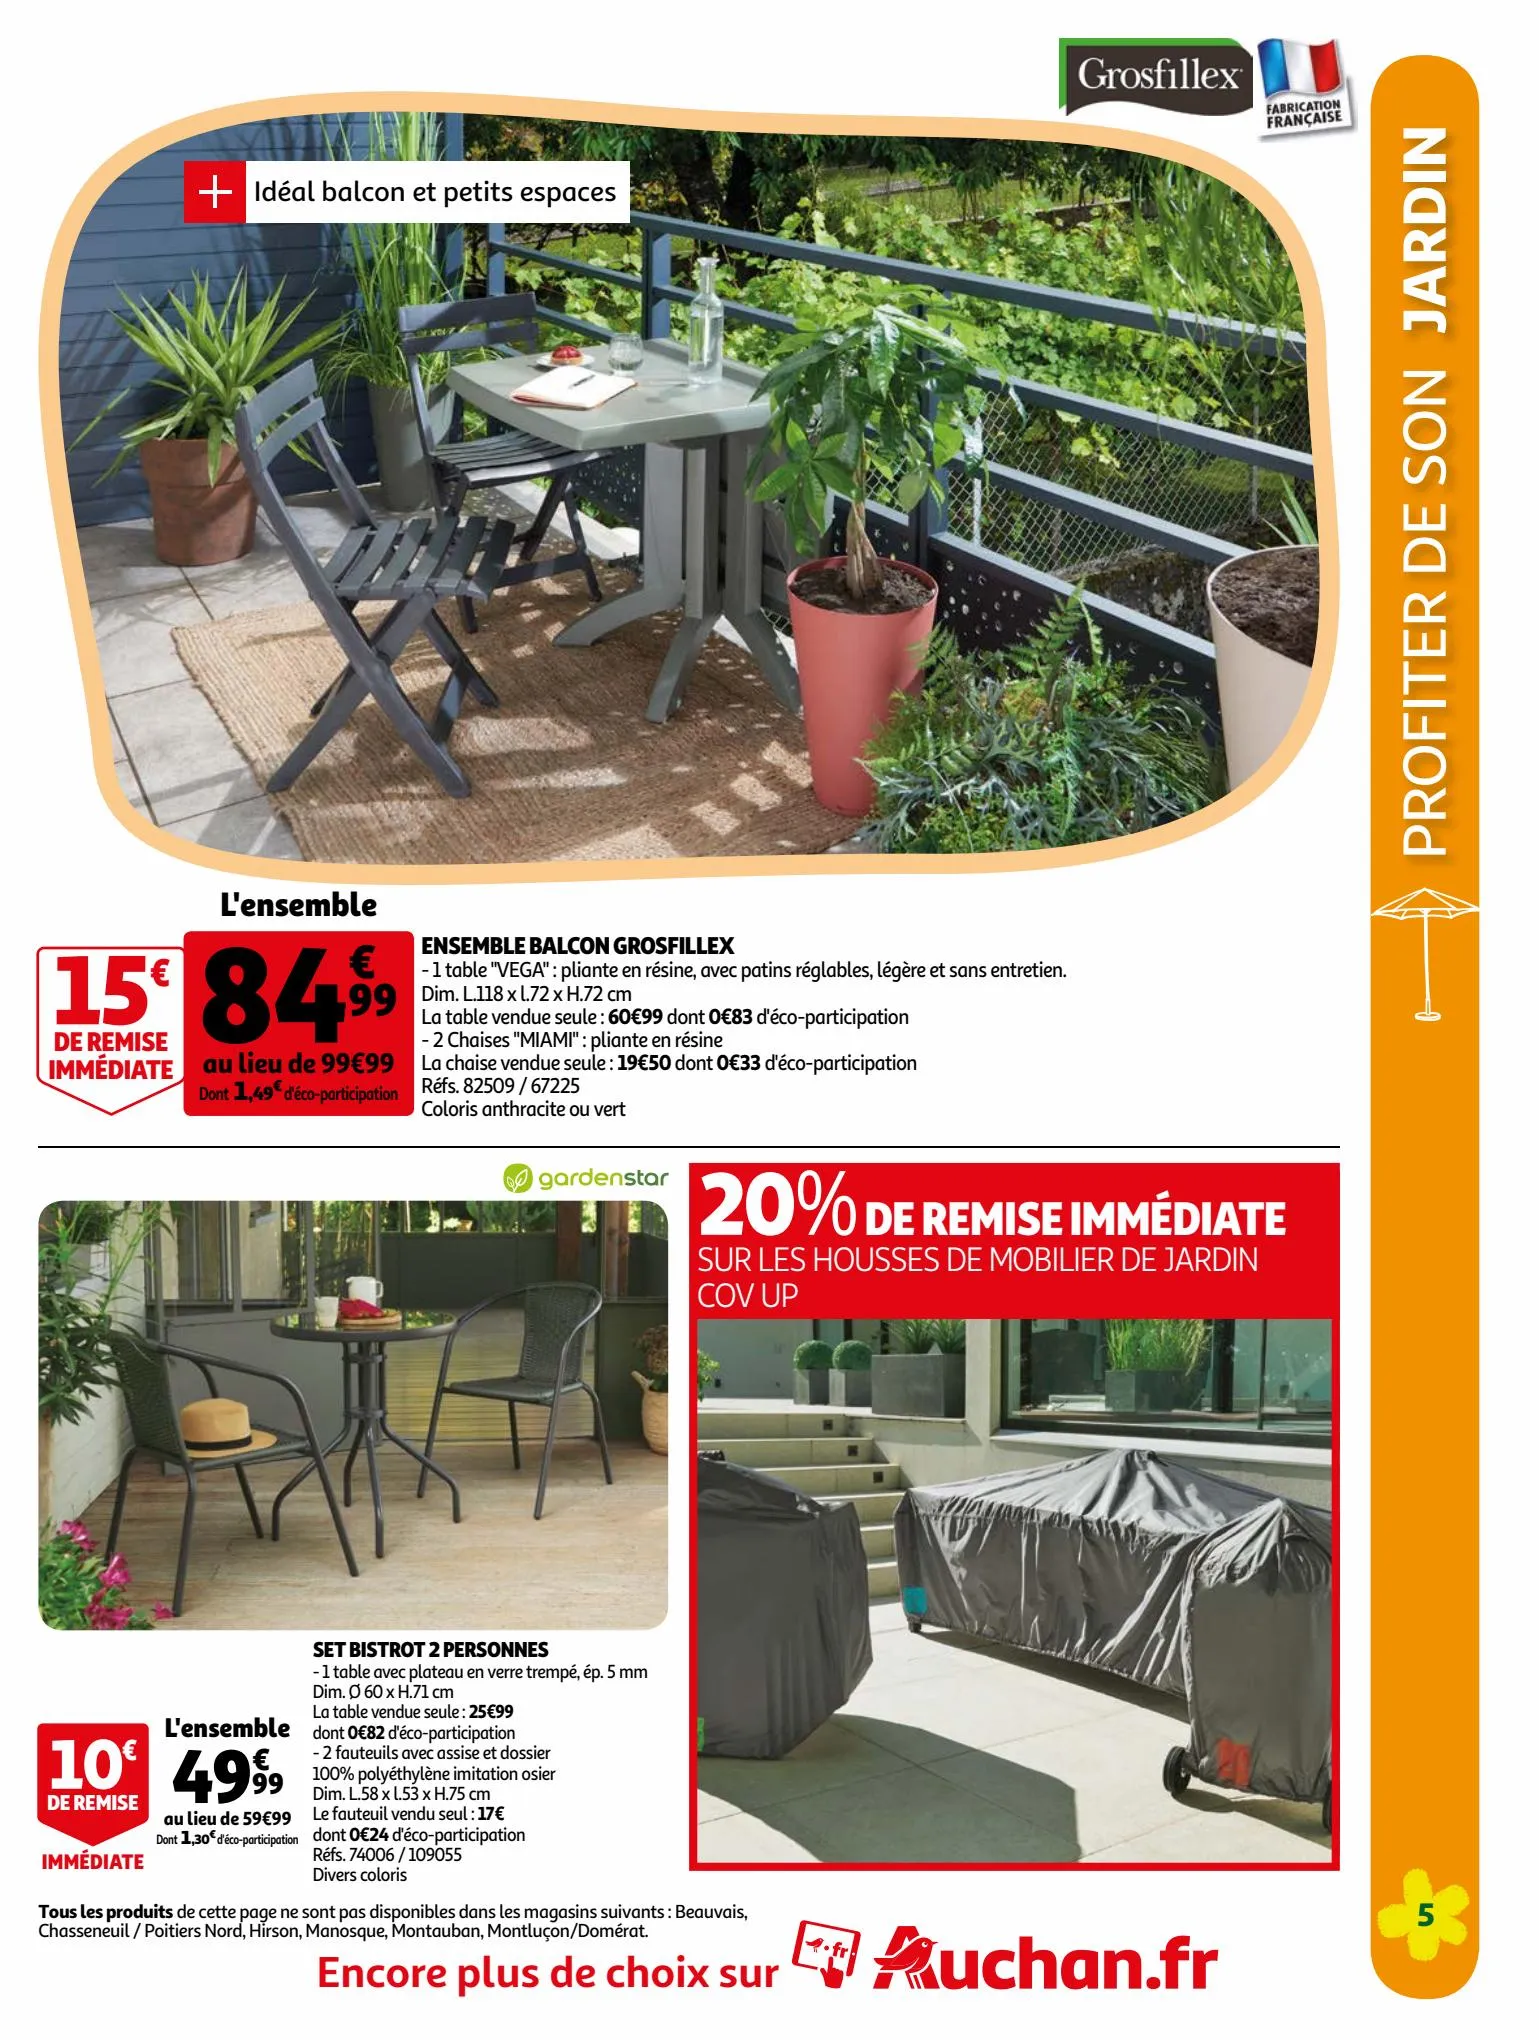 Catalogue Profiter du jardin, page 00005